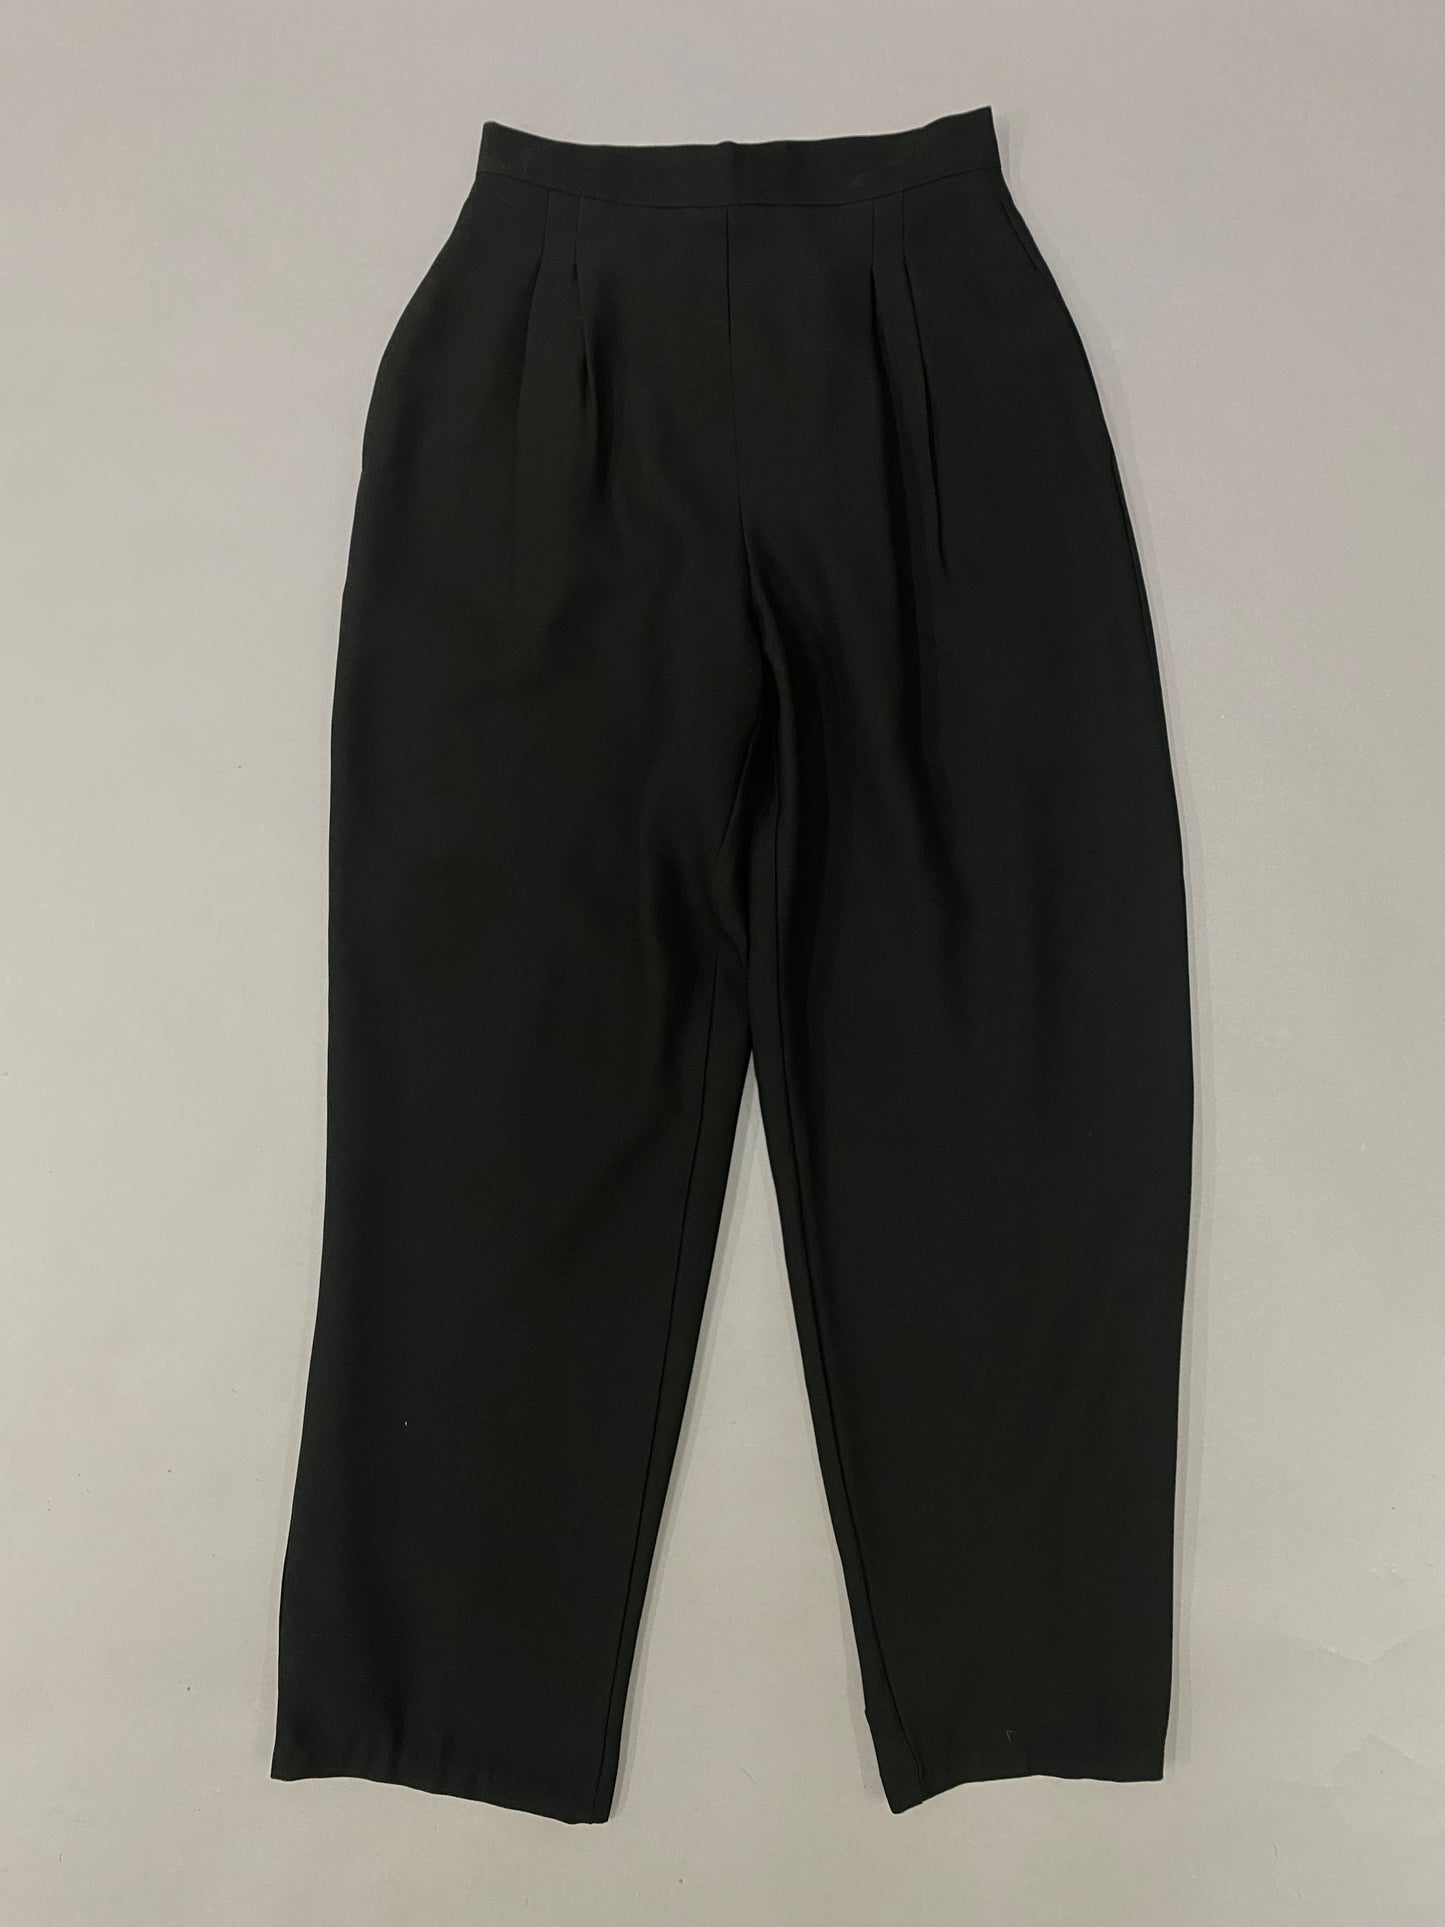 80's Black Pants - 10